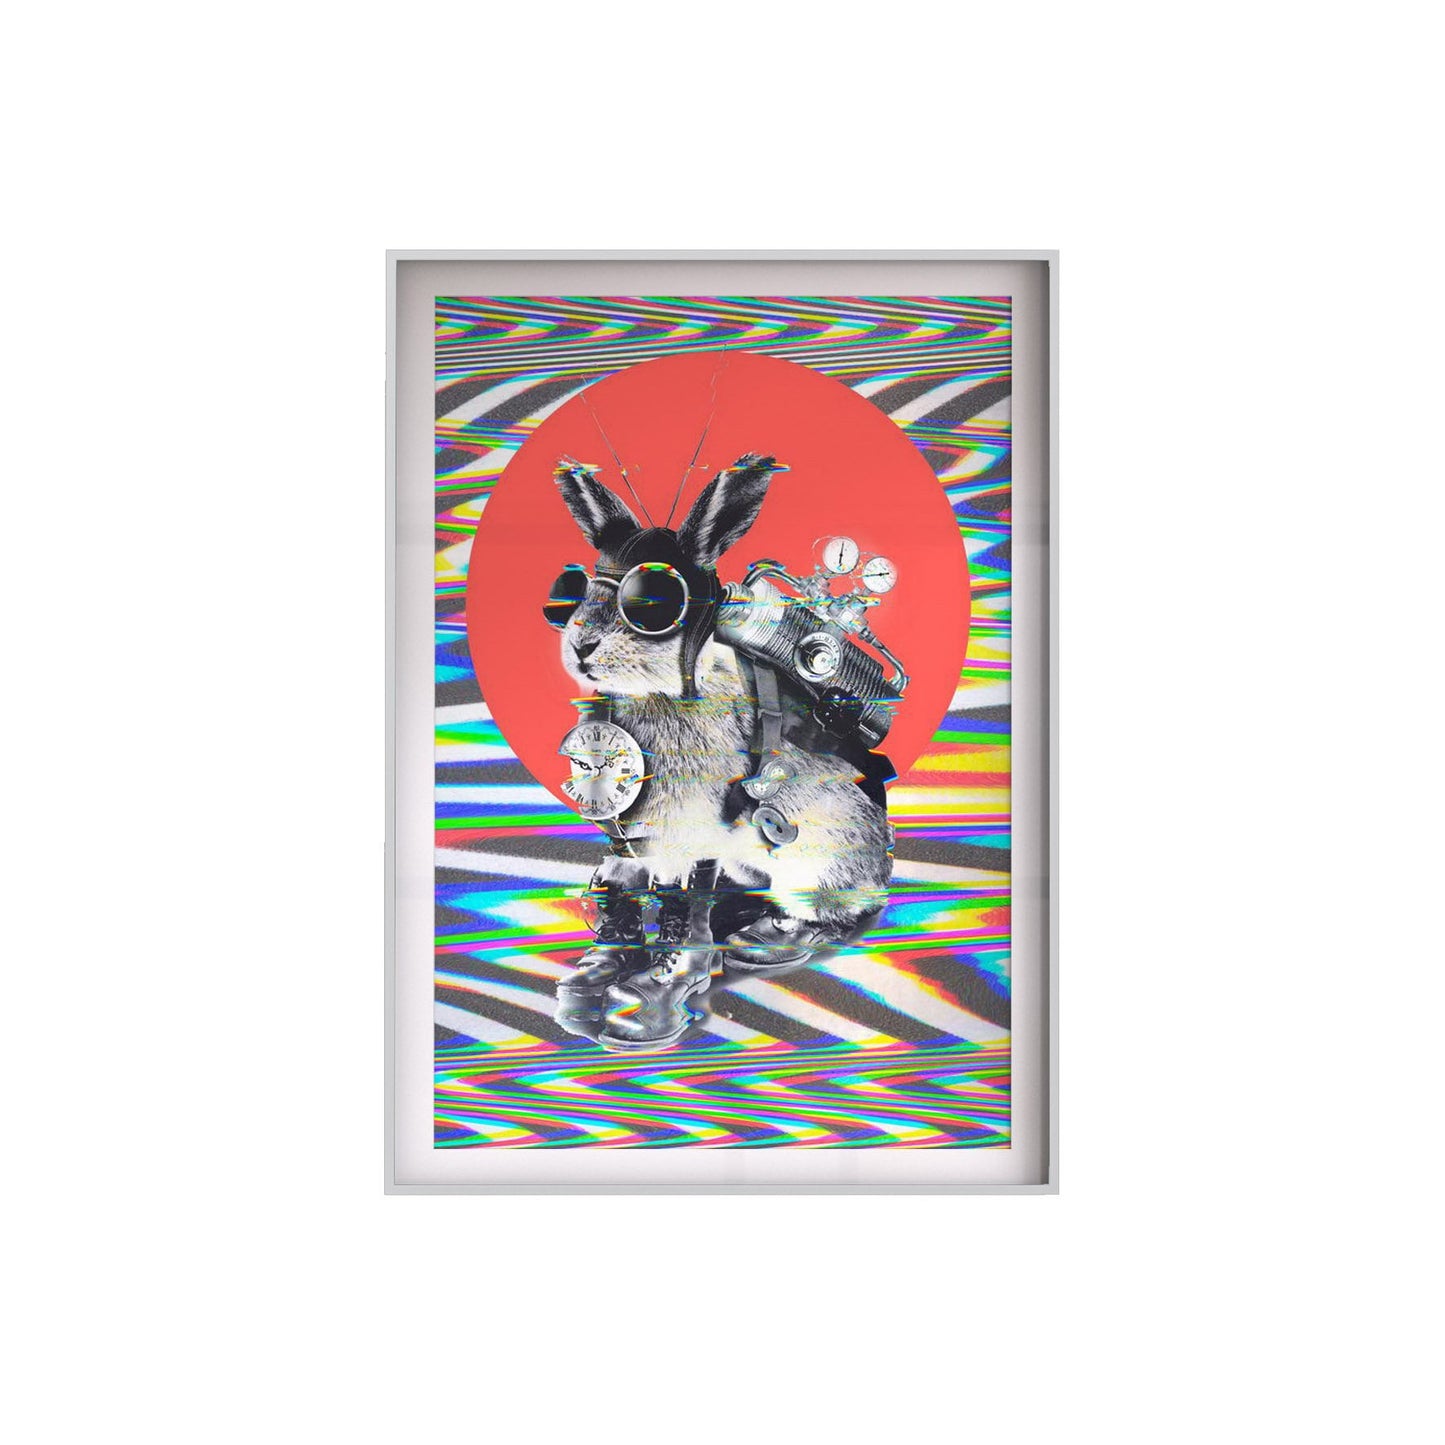 Bunny Poster, Funny Animal Art Print, Pop Art Wall Decor, Steam Punk Wall Art Home Decor Gift, Funny Bunny Illustration Wall Decor